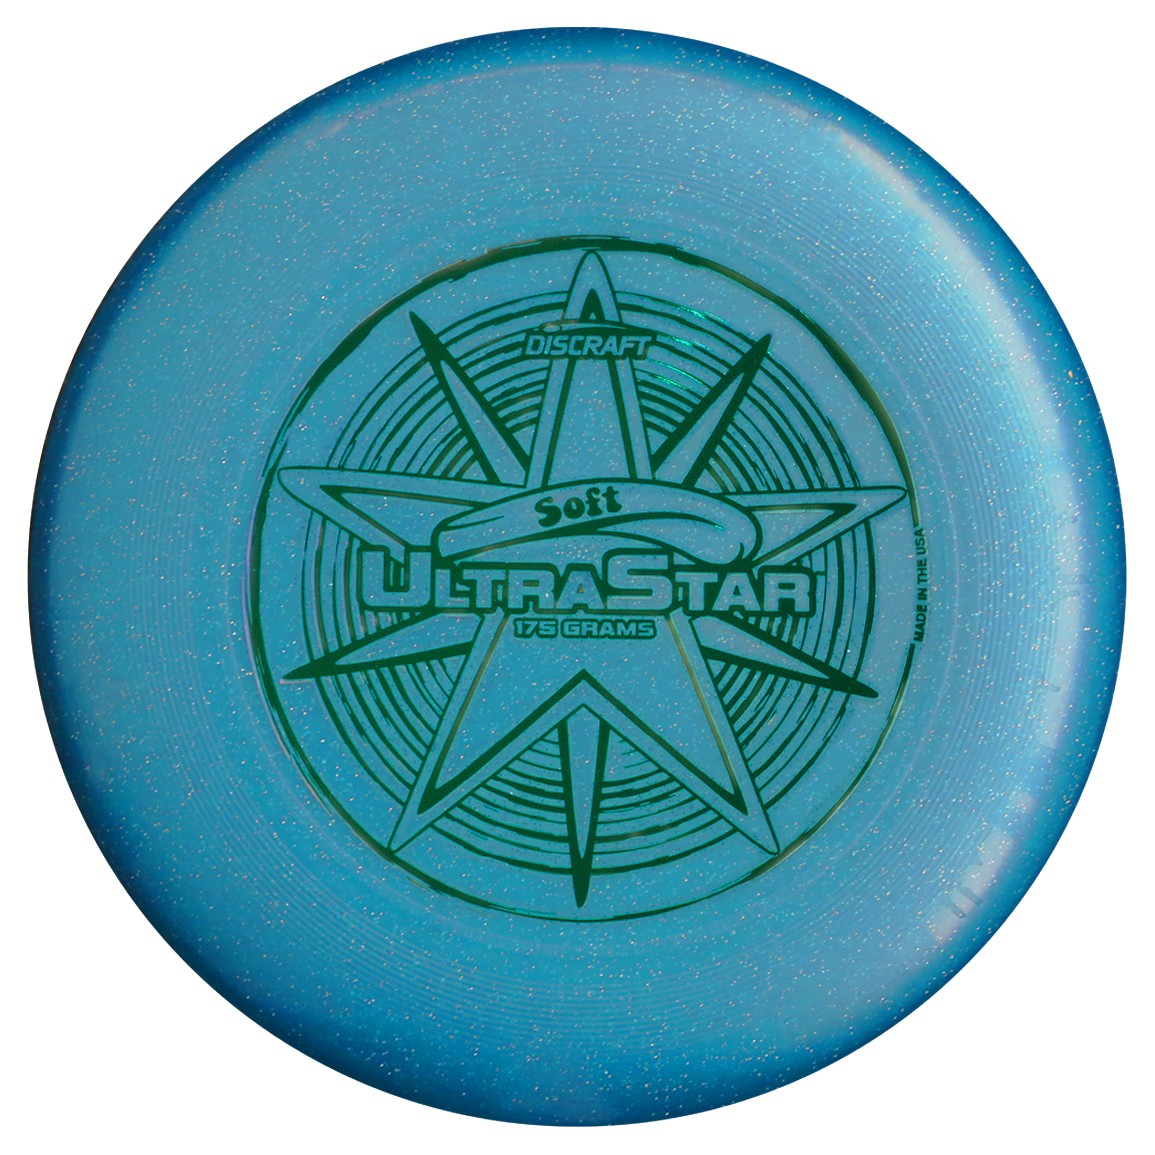 Диск Фрисби Discraft Ultra-Star мягкий синий DUS2842 летающая тарелка urm диск d 27см фрисби с рисунком для игр на улице белая